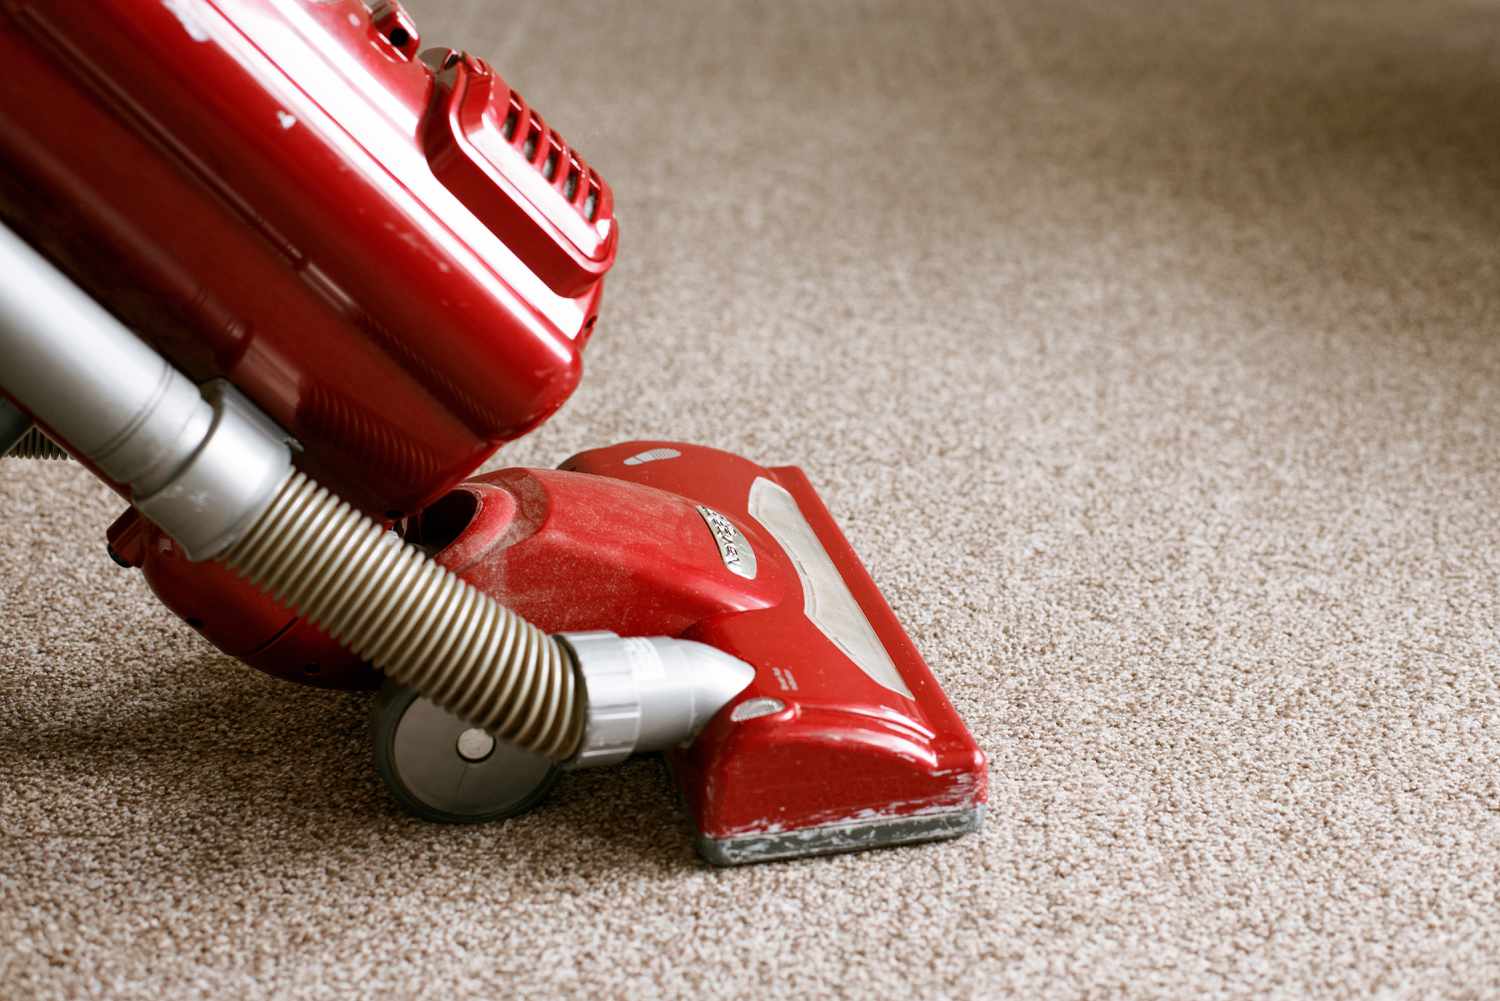 Aspirateur rouge nettoyage tapis tan